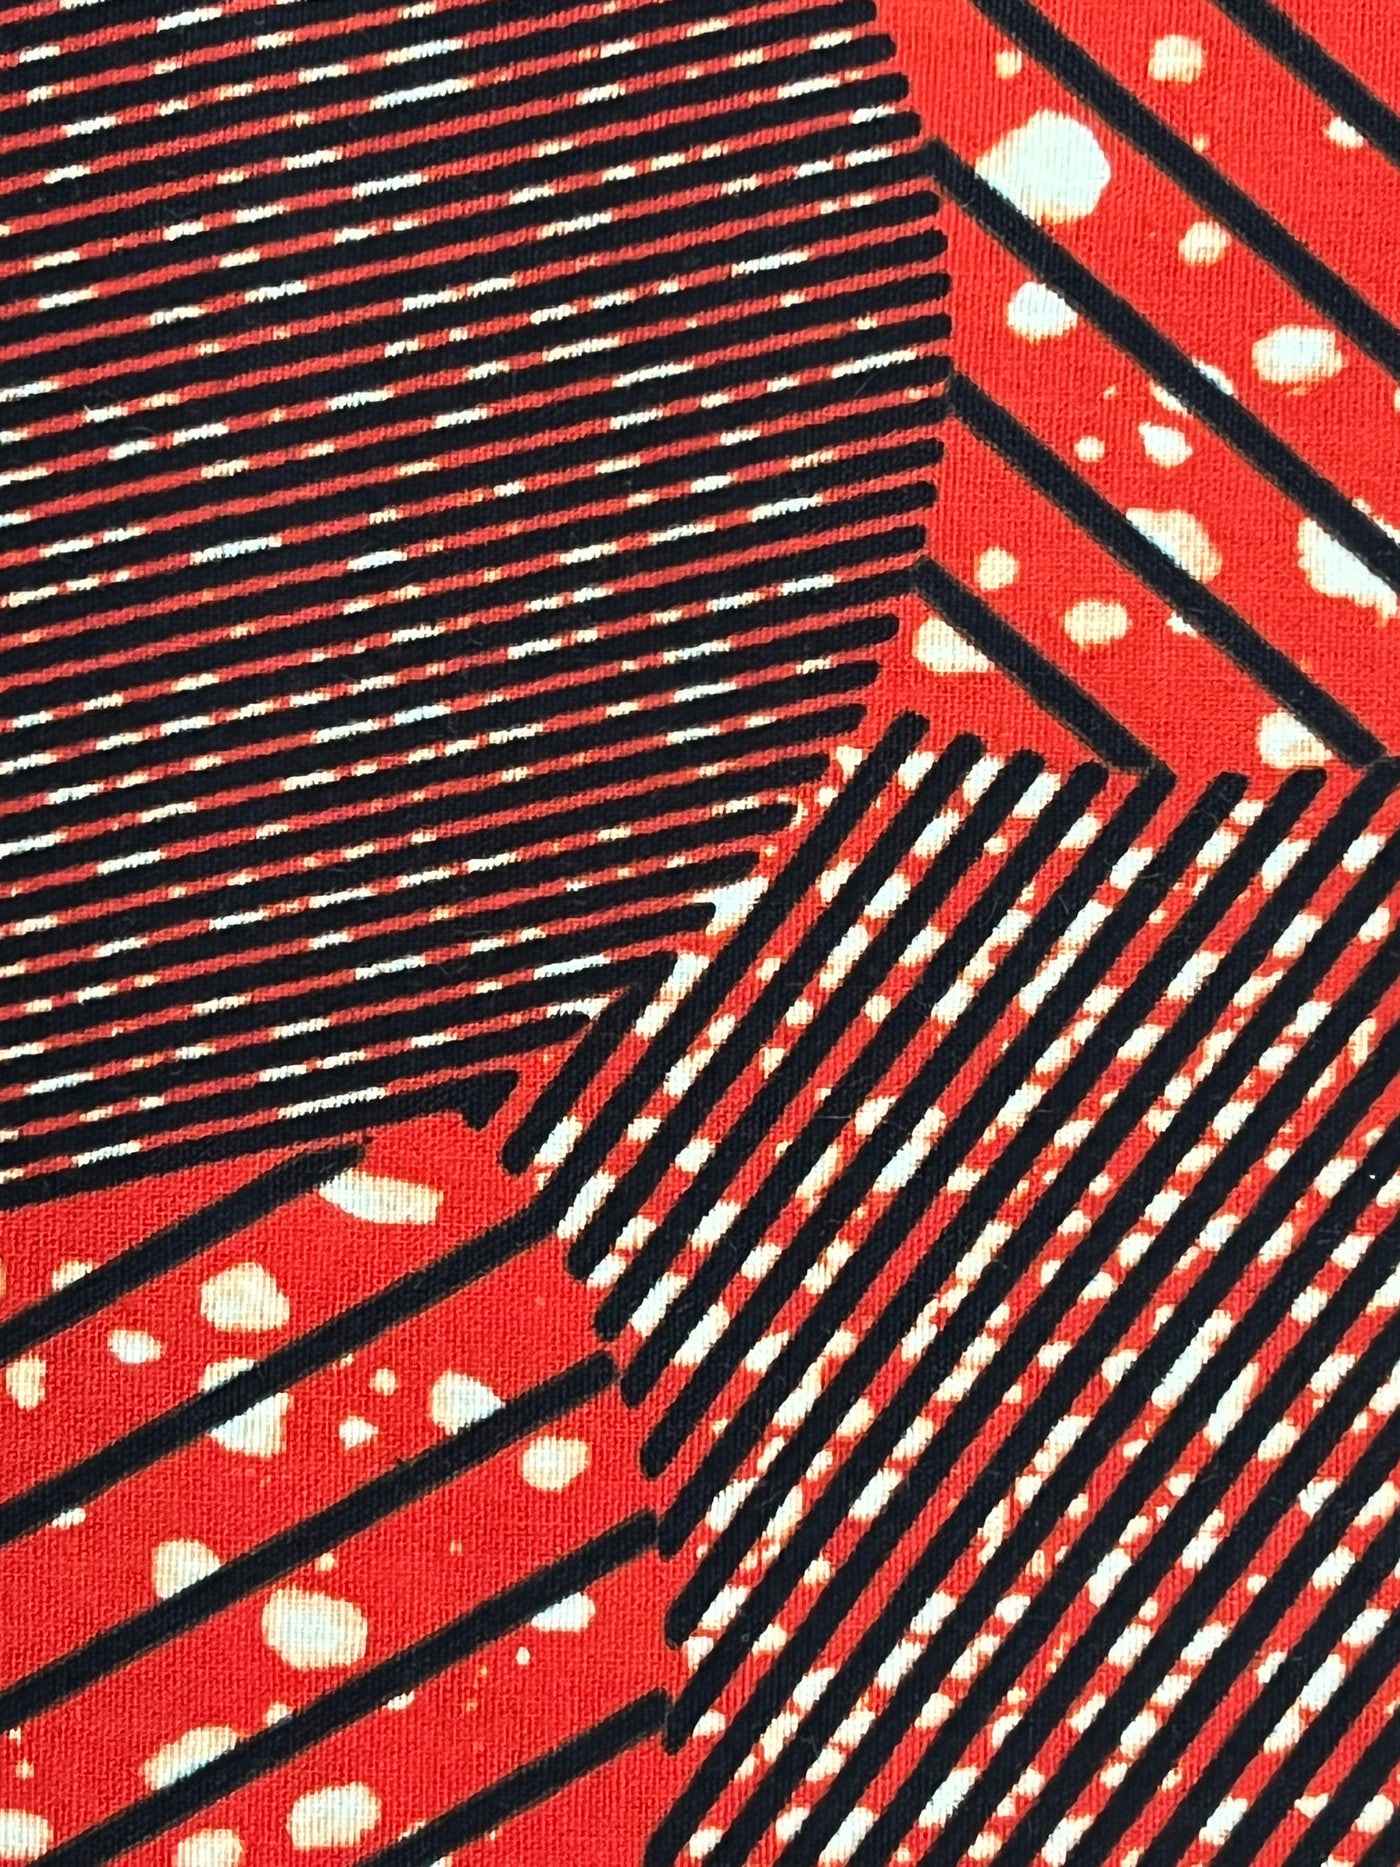 Ankara Fabric - 95708R